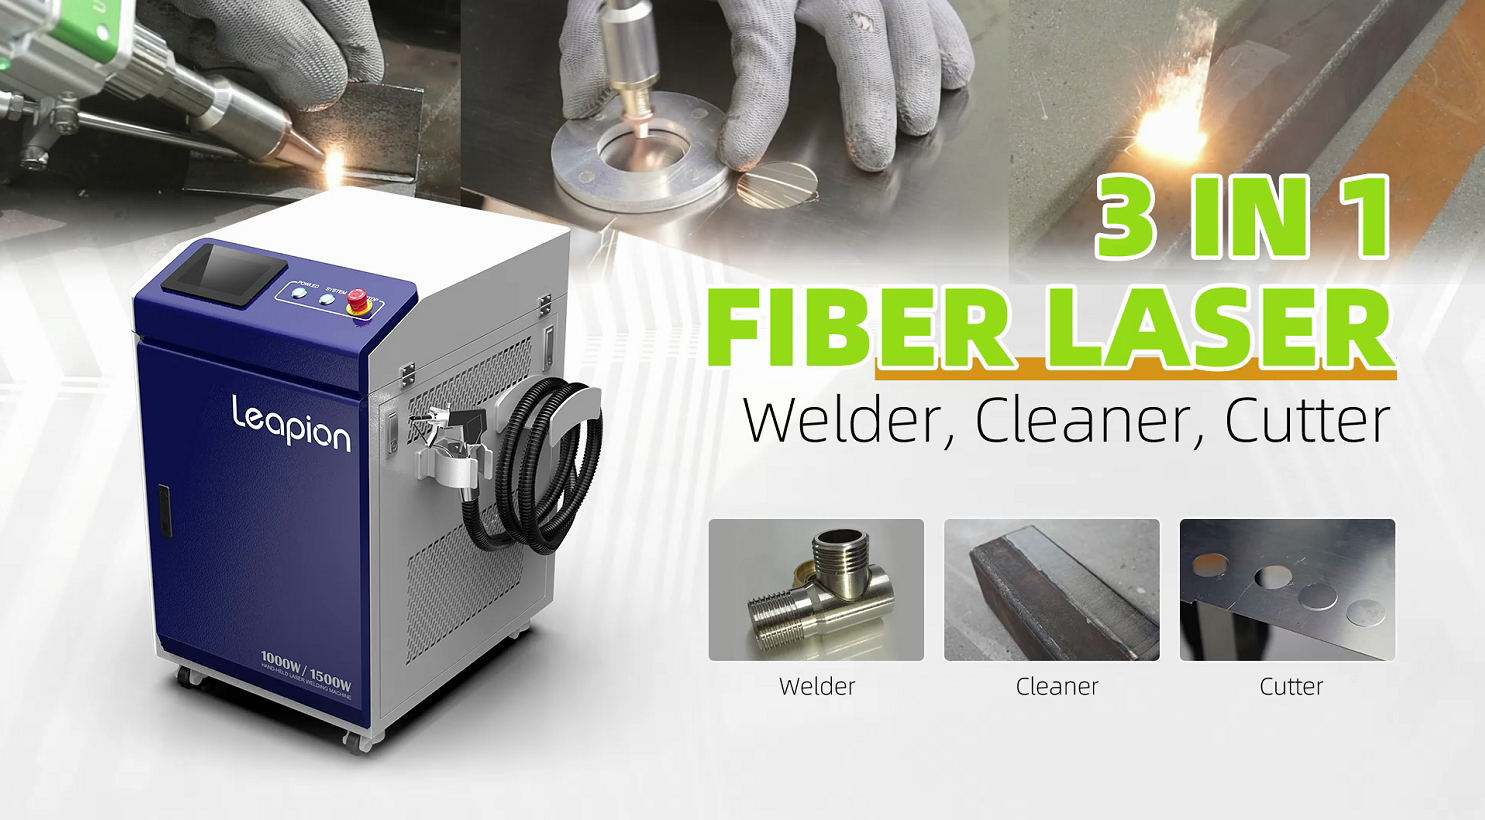 Leapion Hot Sale 3 in 1 Fiber Laser Welder Cutter Cleaner 